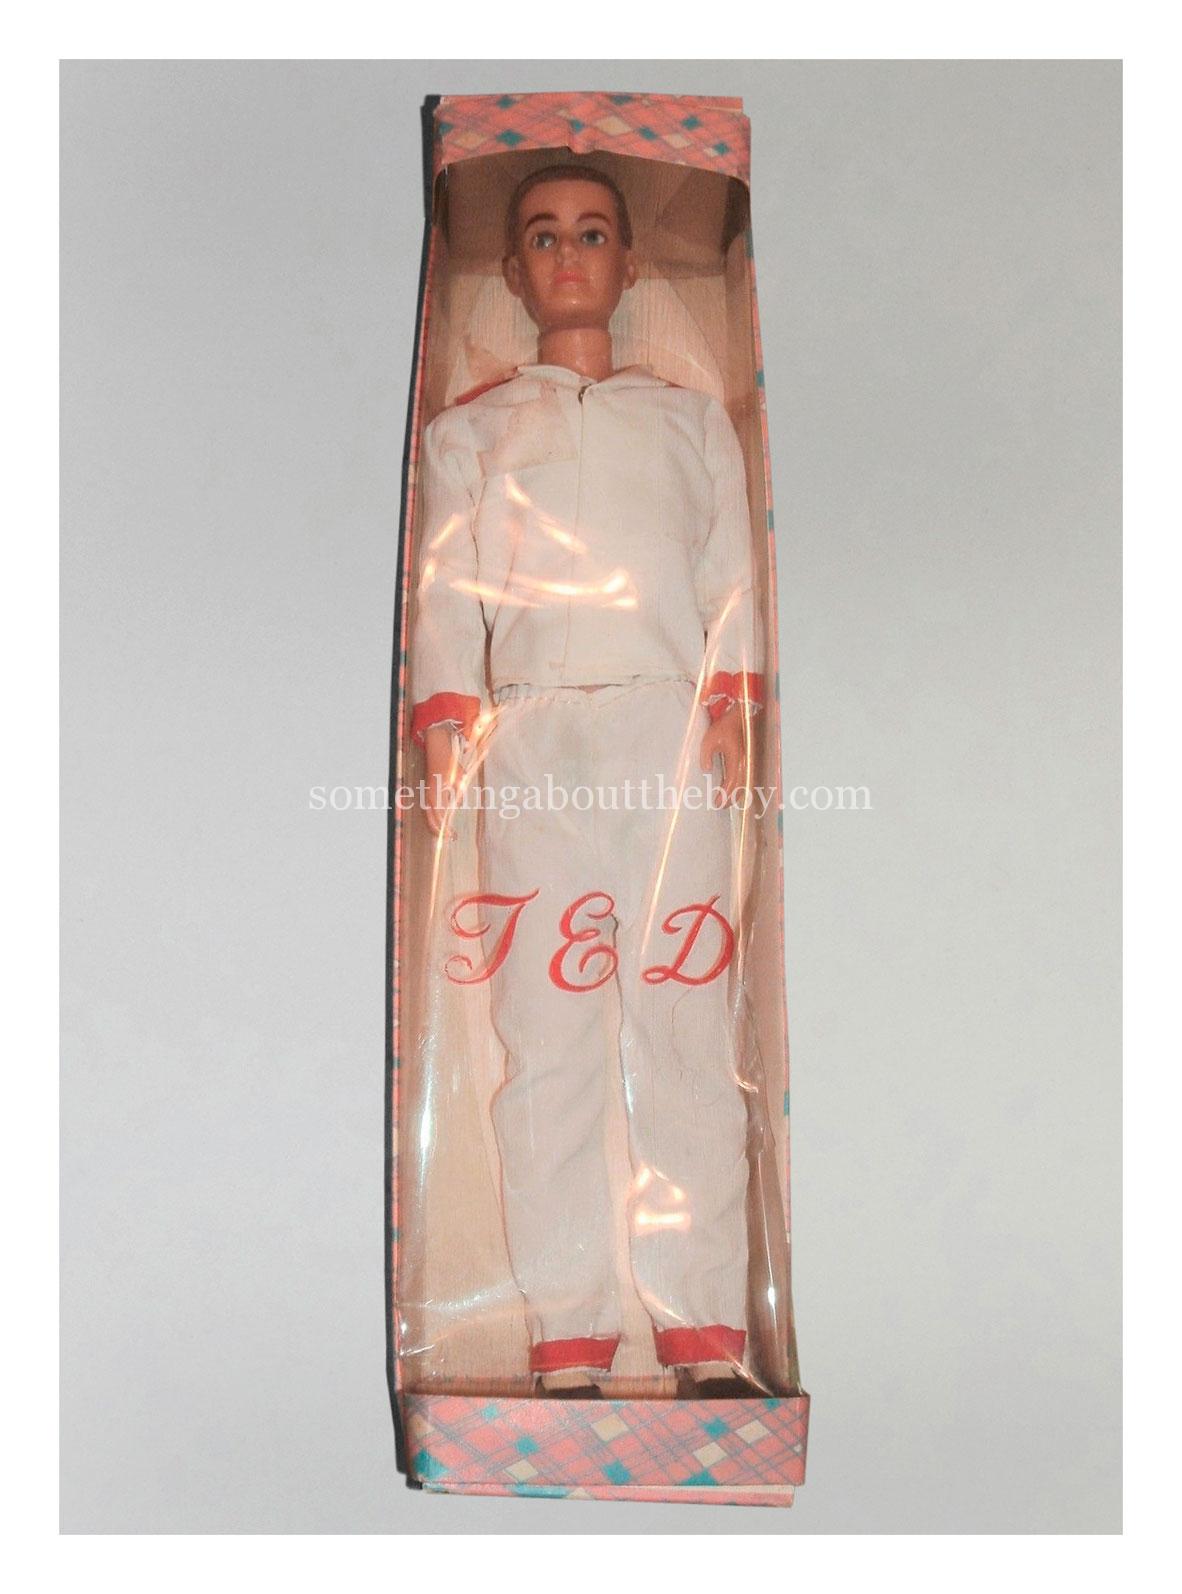 Ted doll in original packaging